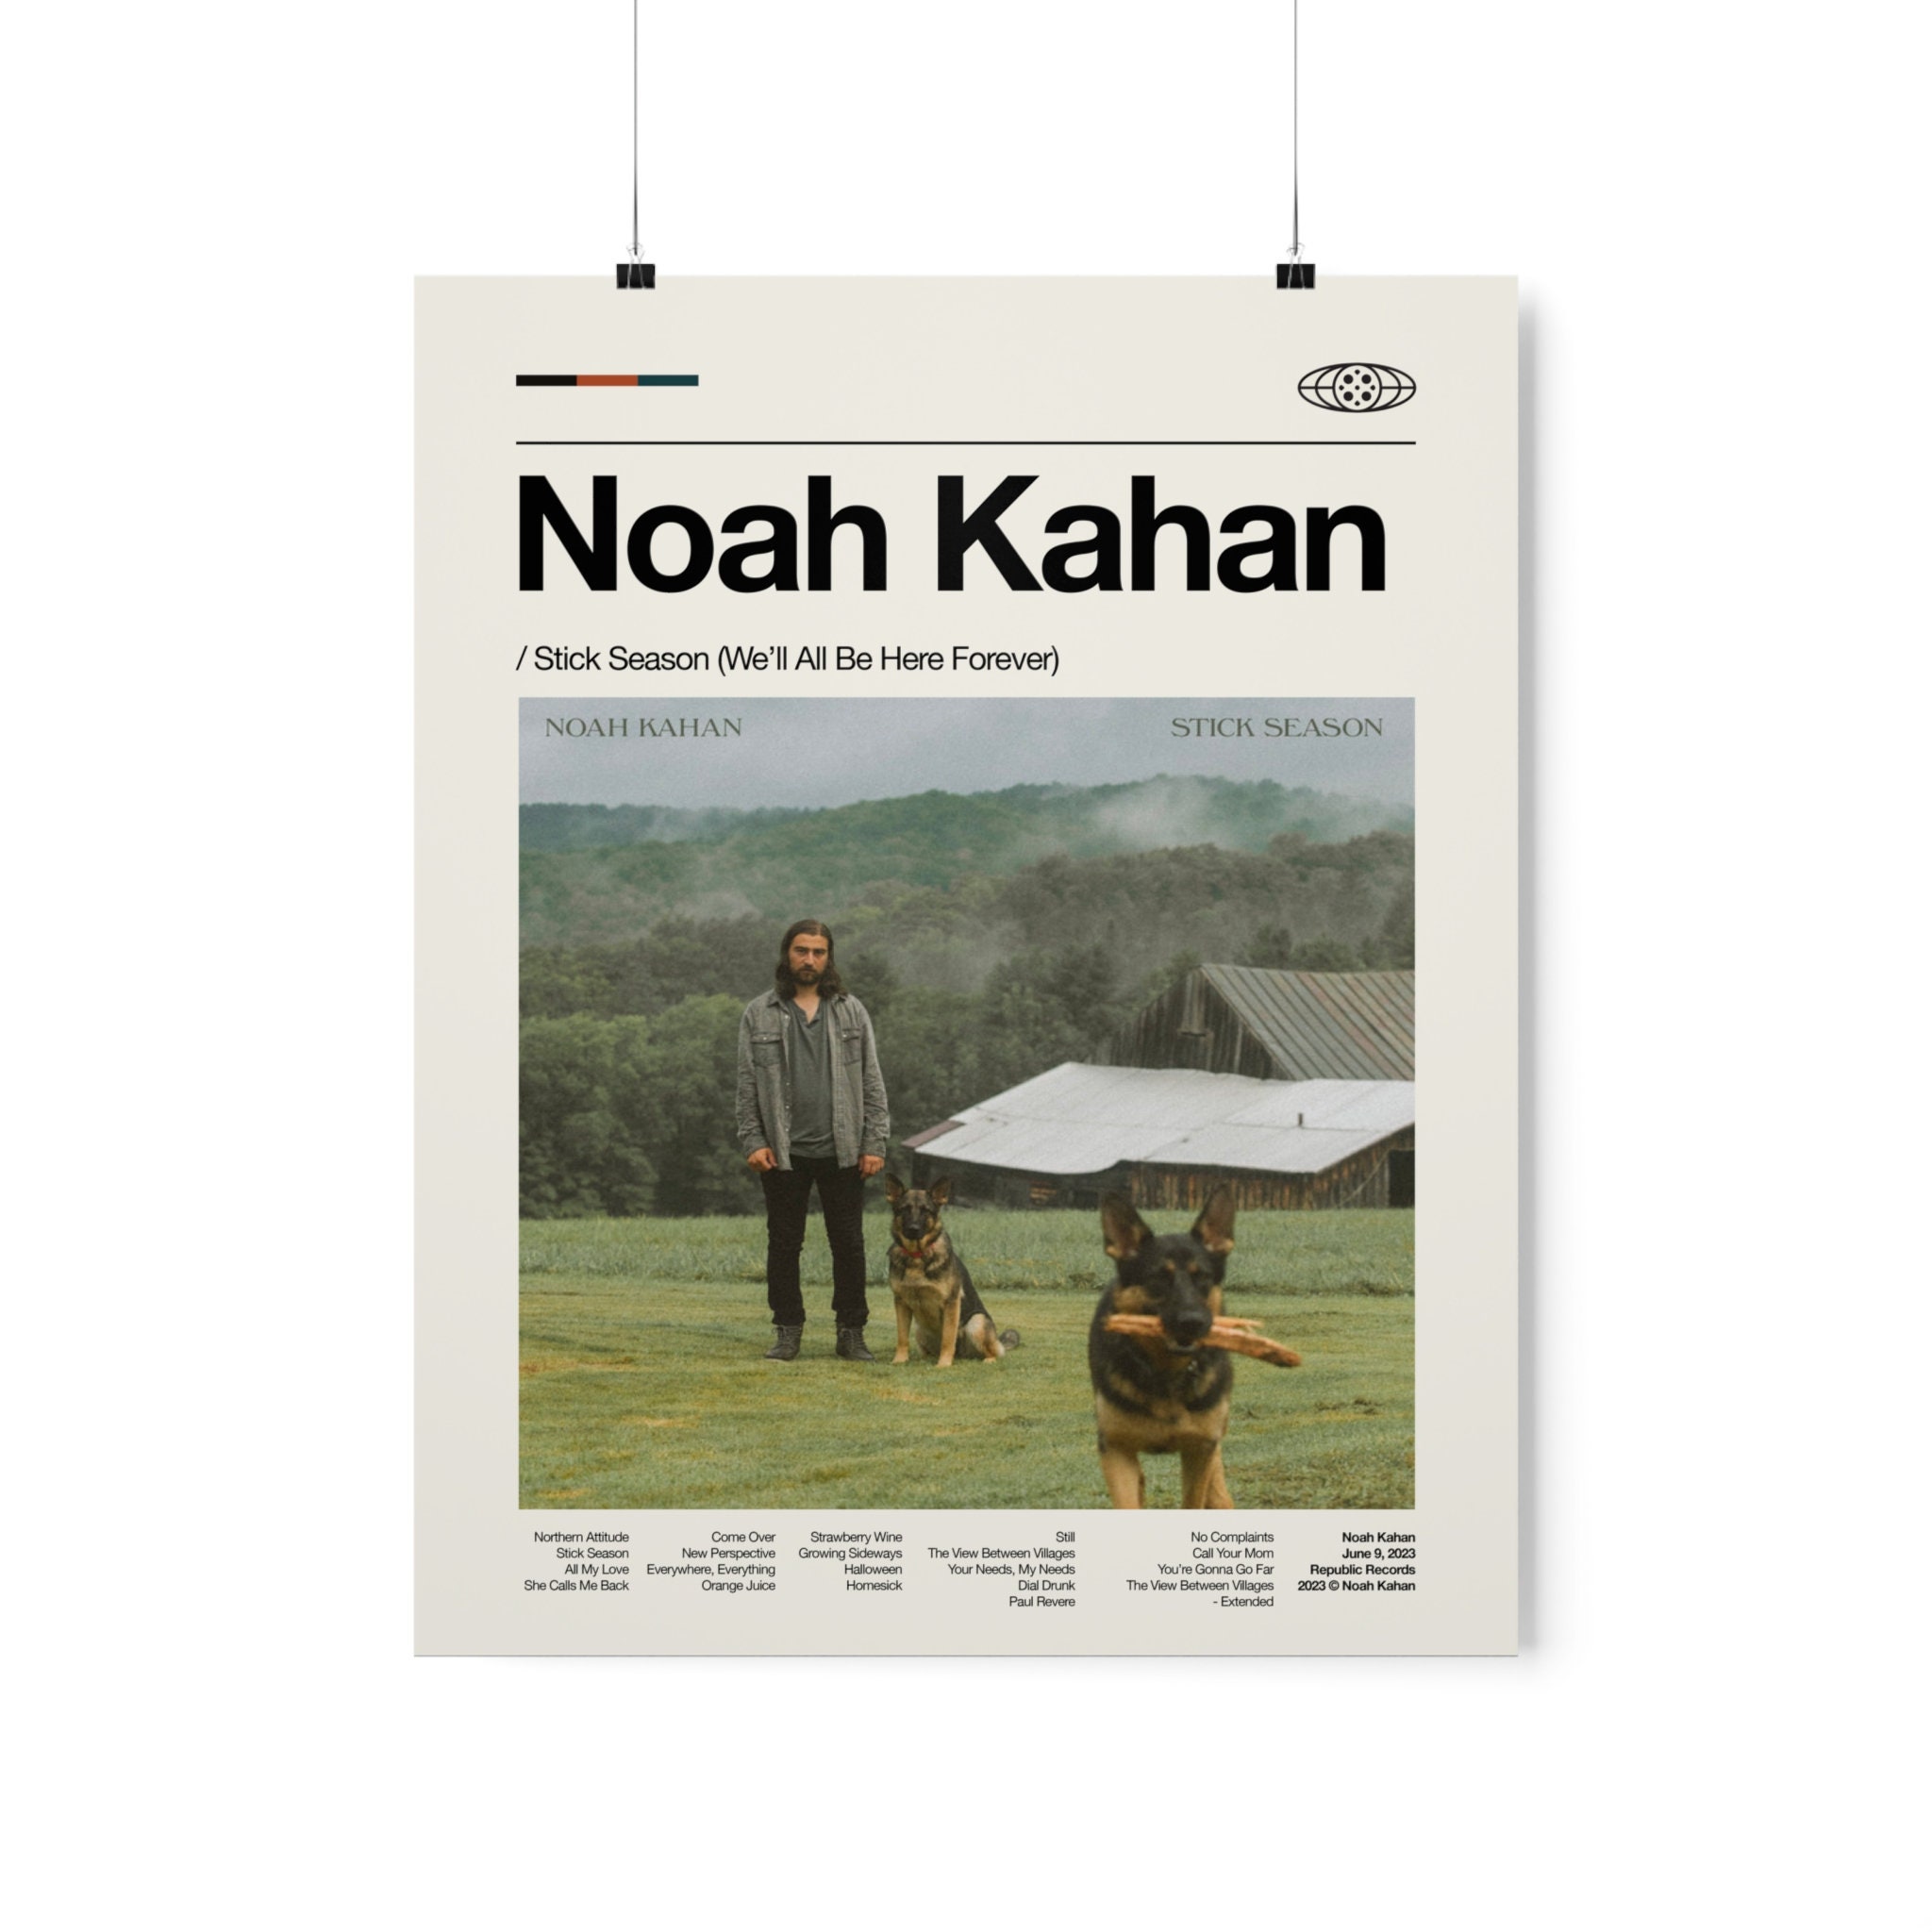 Rust & Wax Record Shop on Instagram: Noah Kahan Stick Season is